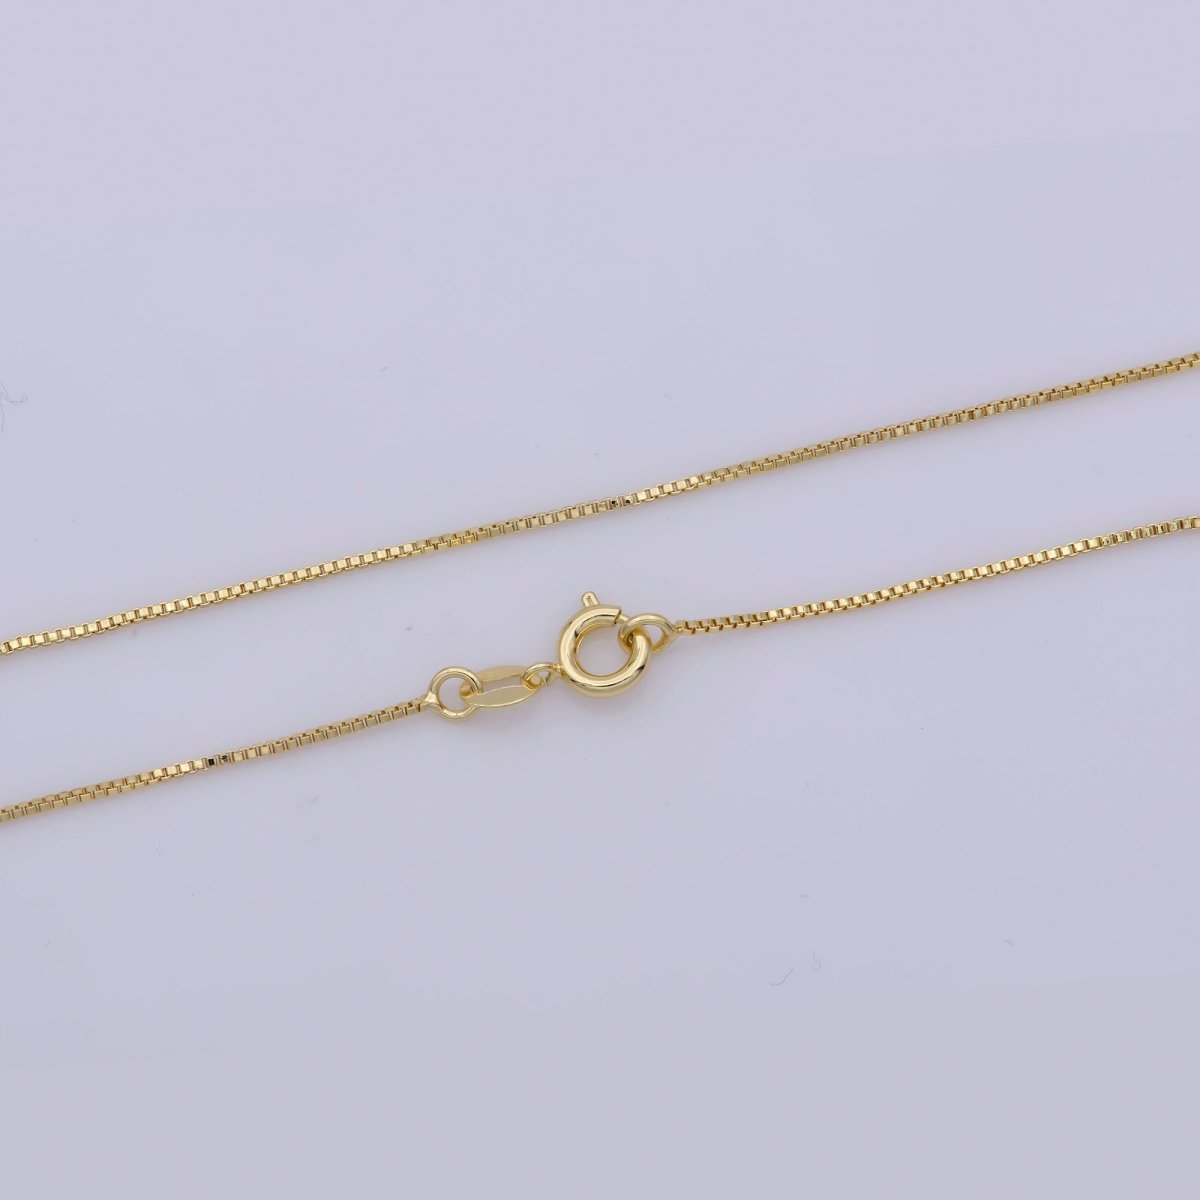 16K Gold Filled 0.75mm BOX Chain - Gold Box chain 16 / 17.7 / 19.5 inch Box Chain Necklace Jewelry Making Supply | WA-275 - DLUXCA